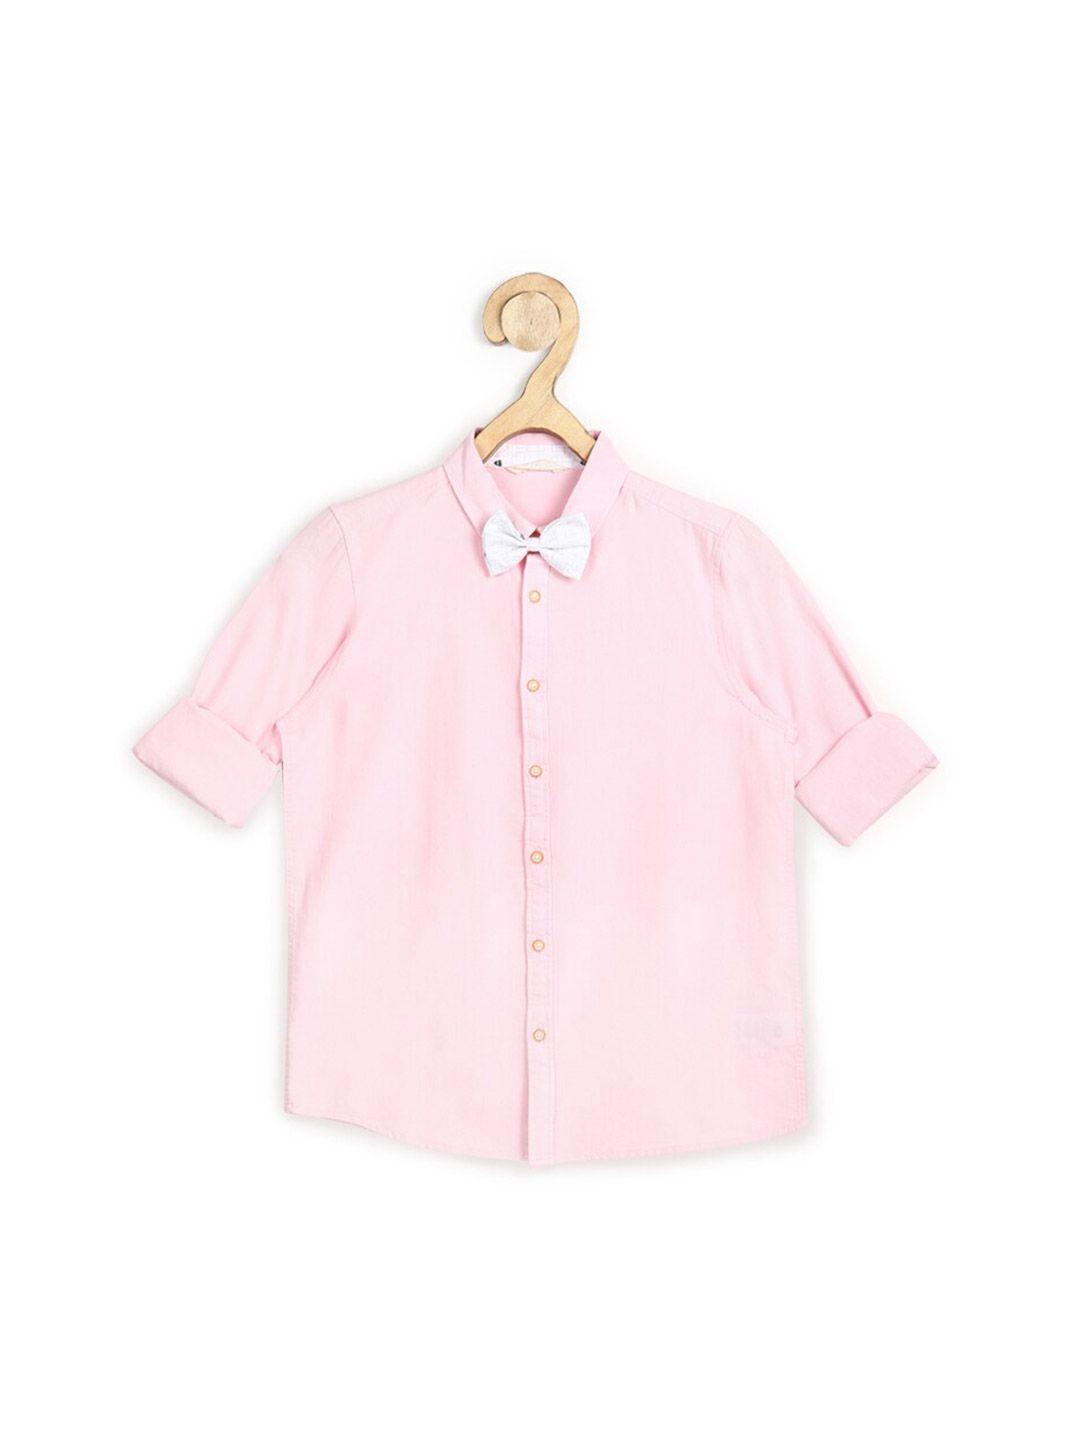 peter england boys pink cotton party shirt